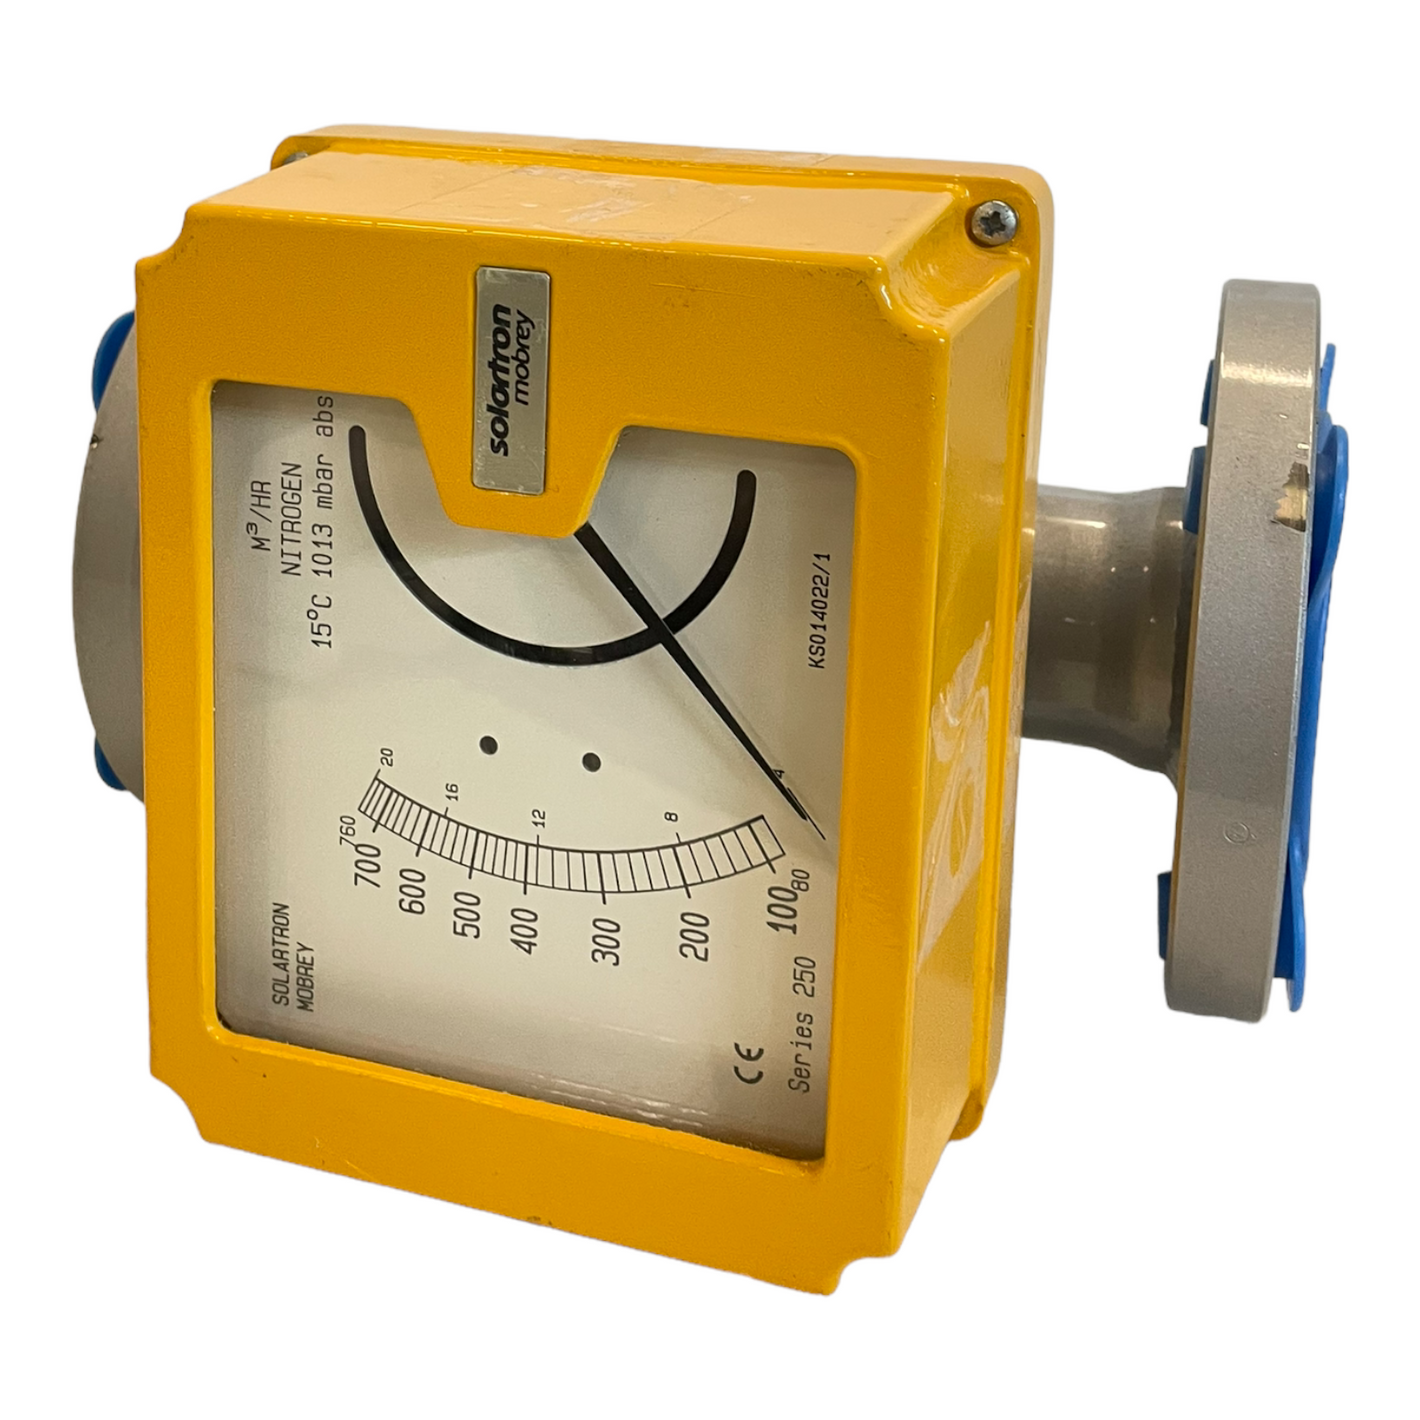 Solatron Mobrey KS014022/1 Flow meter for industrial use KS014022